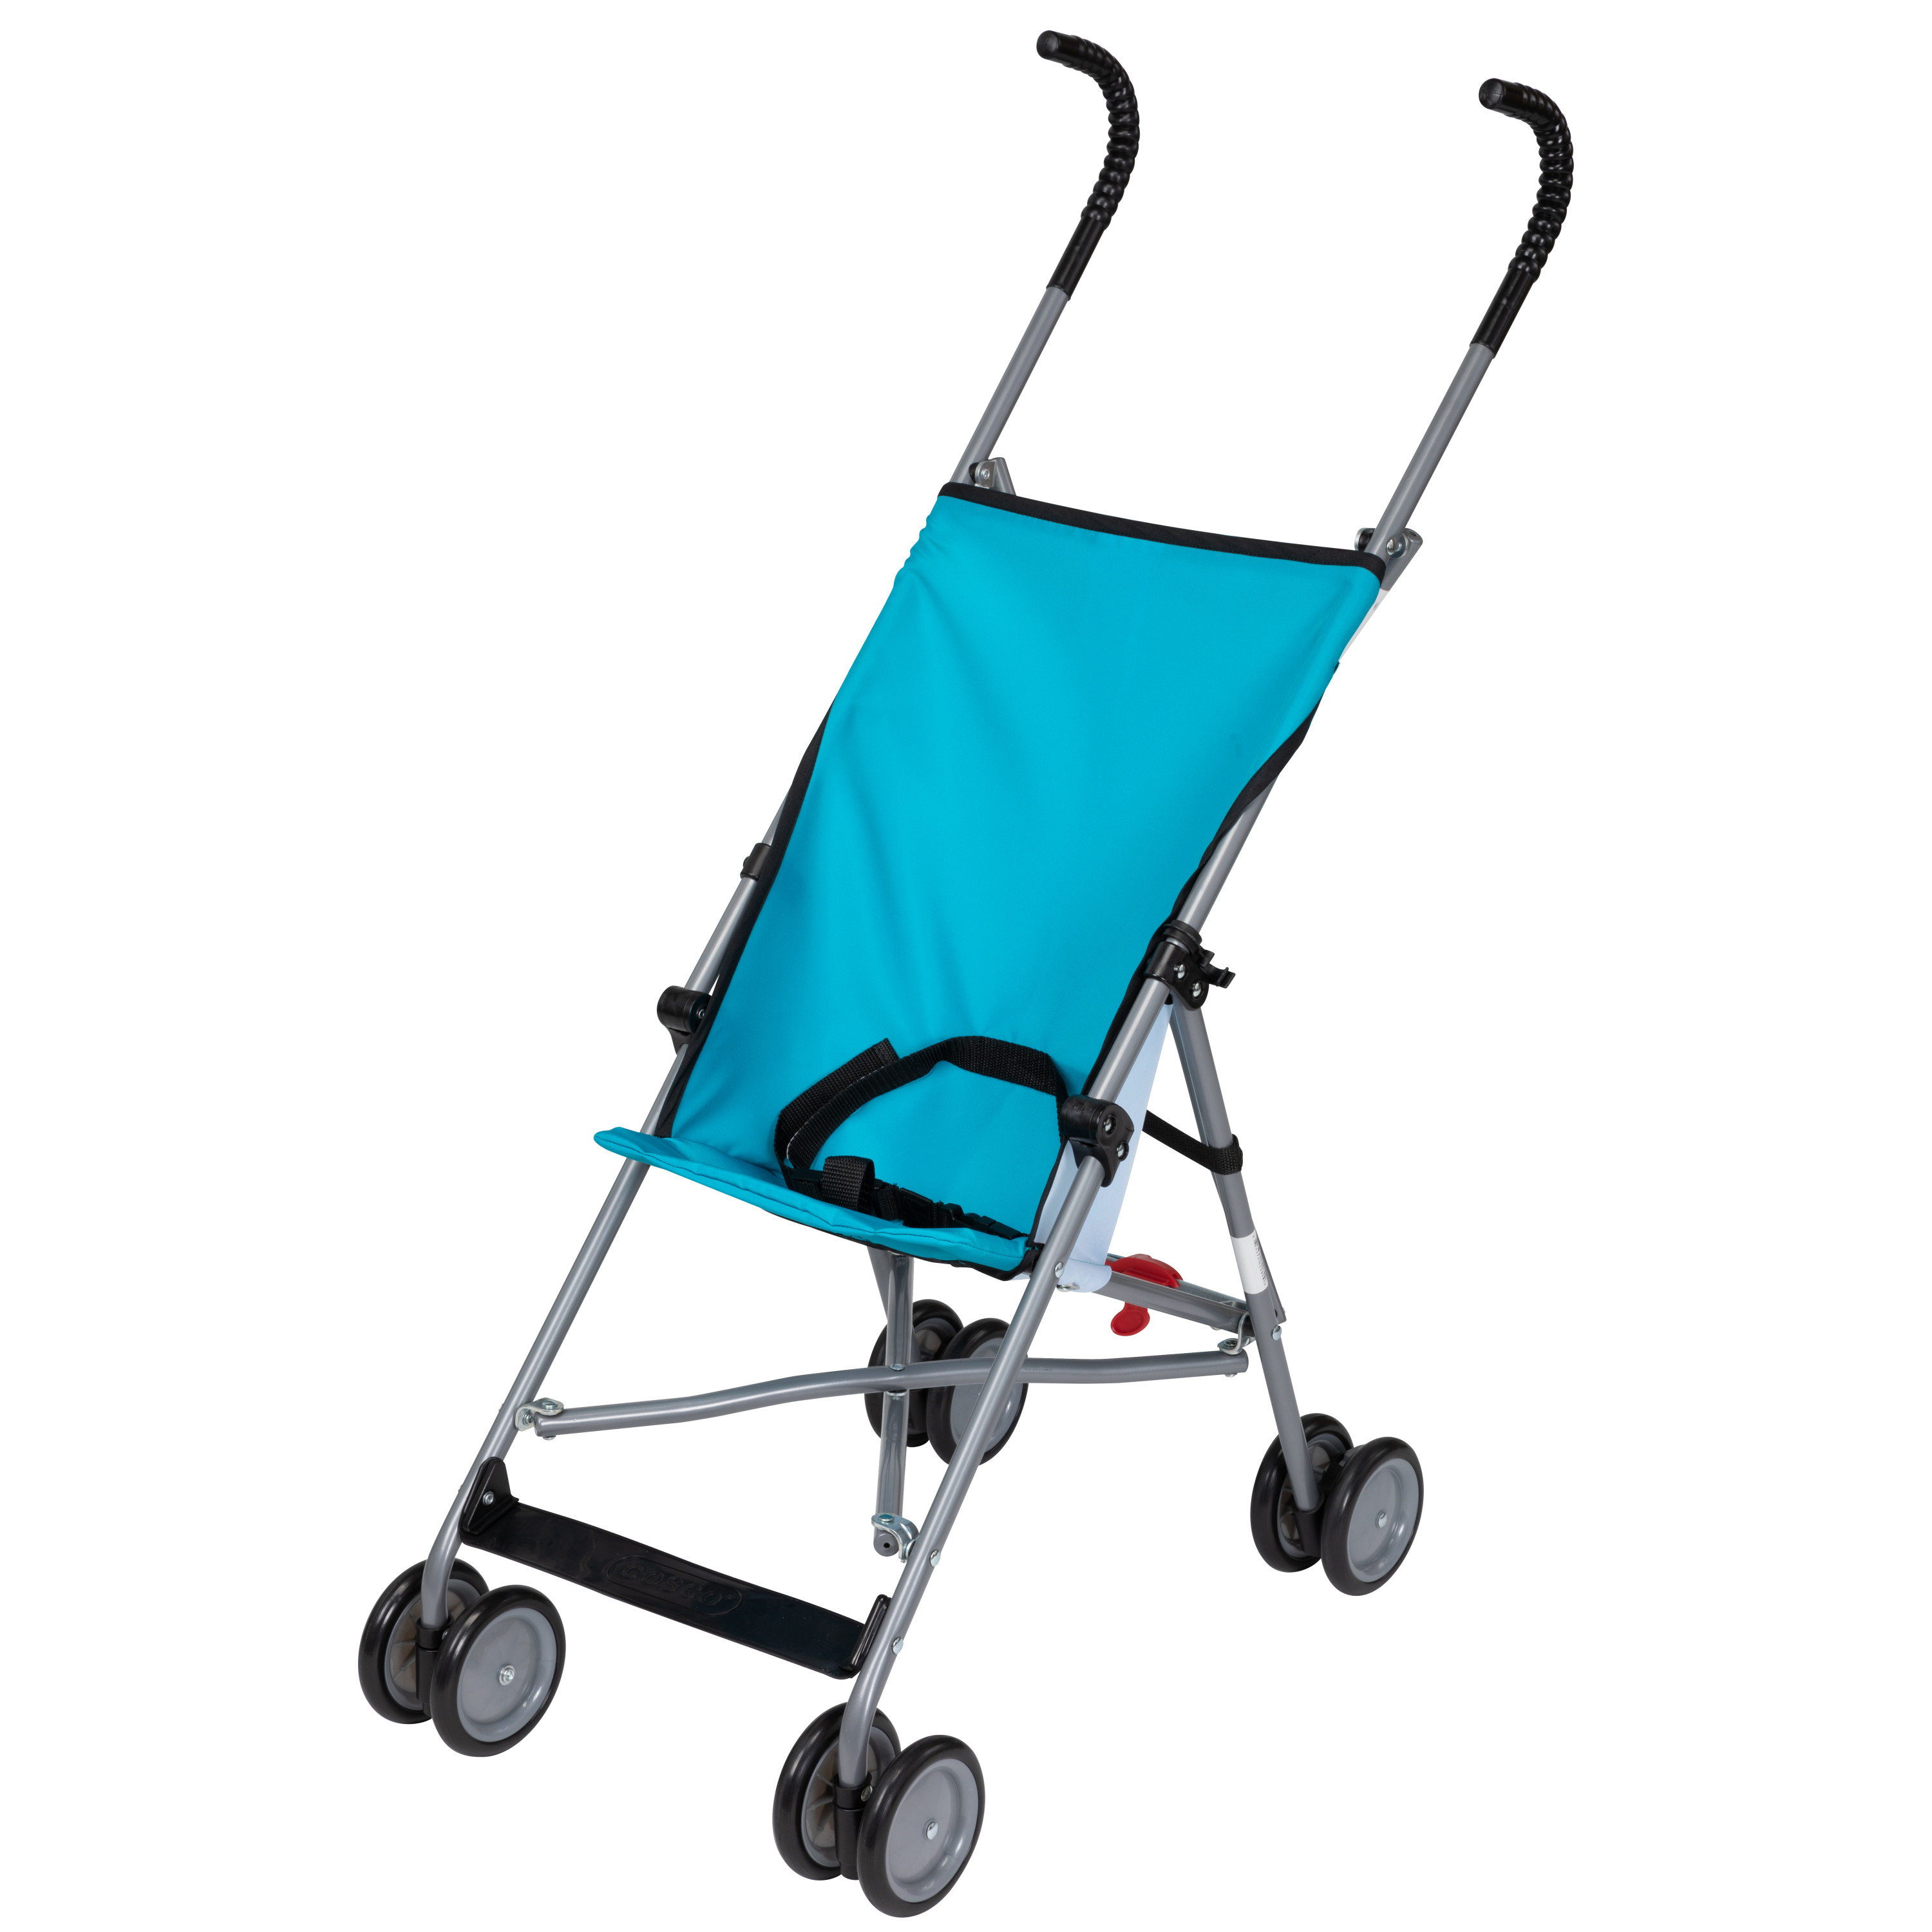 Cosco Kids Comfort Height Umbrella Stroller, Freshwater Turquoise - image 1 of 9